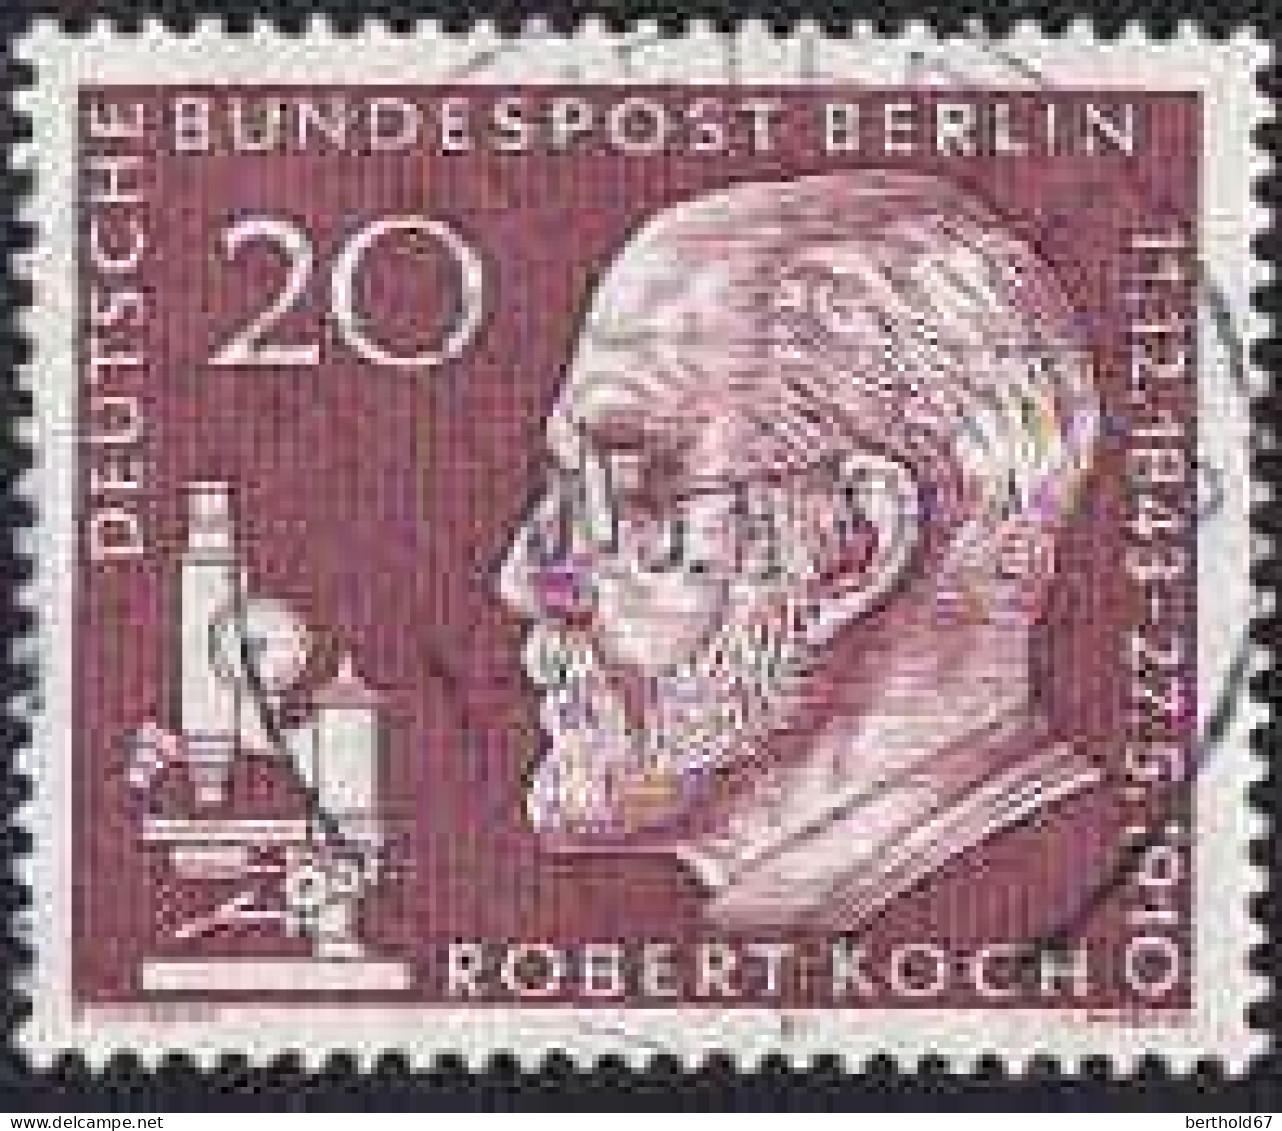 Berlin Poste Obl Yv:170 Mi:191 Robert Koch Bacteriologue Prix Nobel (TB Cachet Rond) - Gebruikt